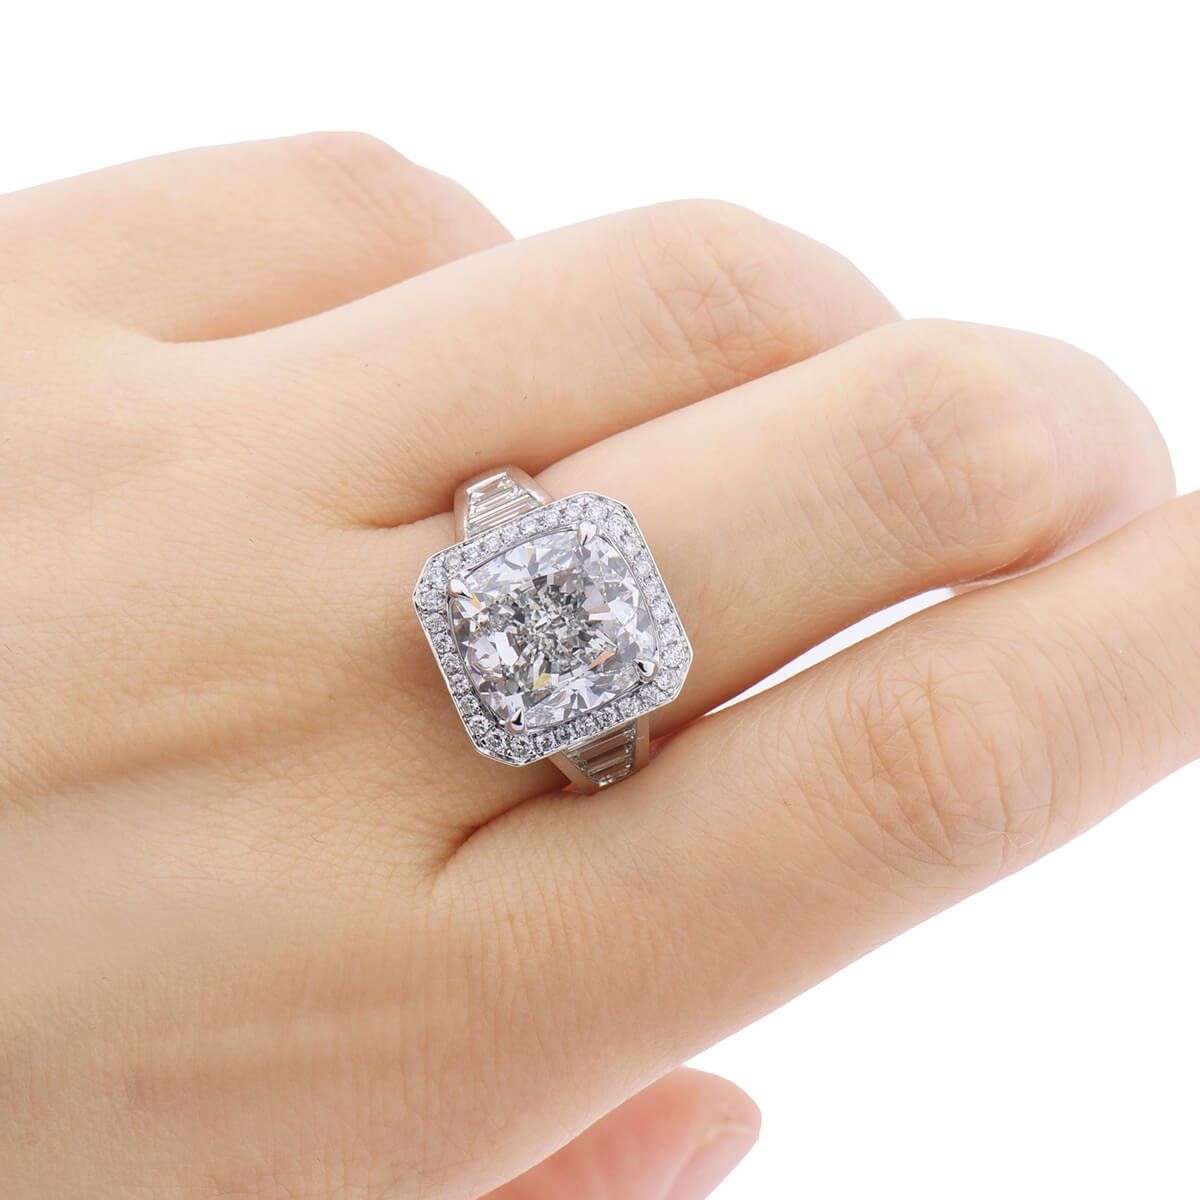  White Diamond Ring, 7.02 Ct. (8.46 Ct. TW), Cushion shape, GIA Certified, 5182970126